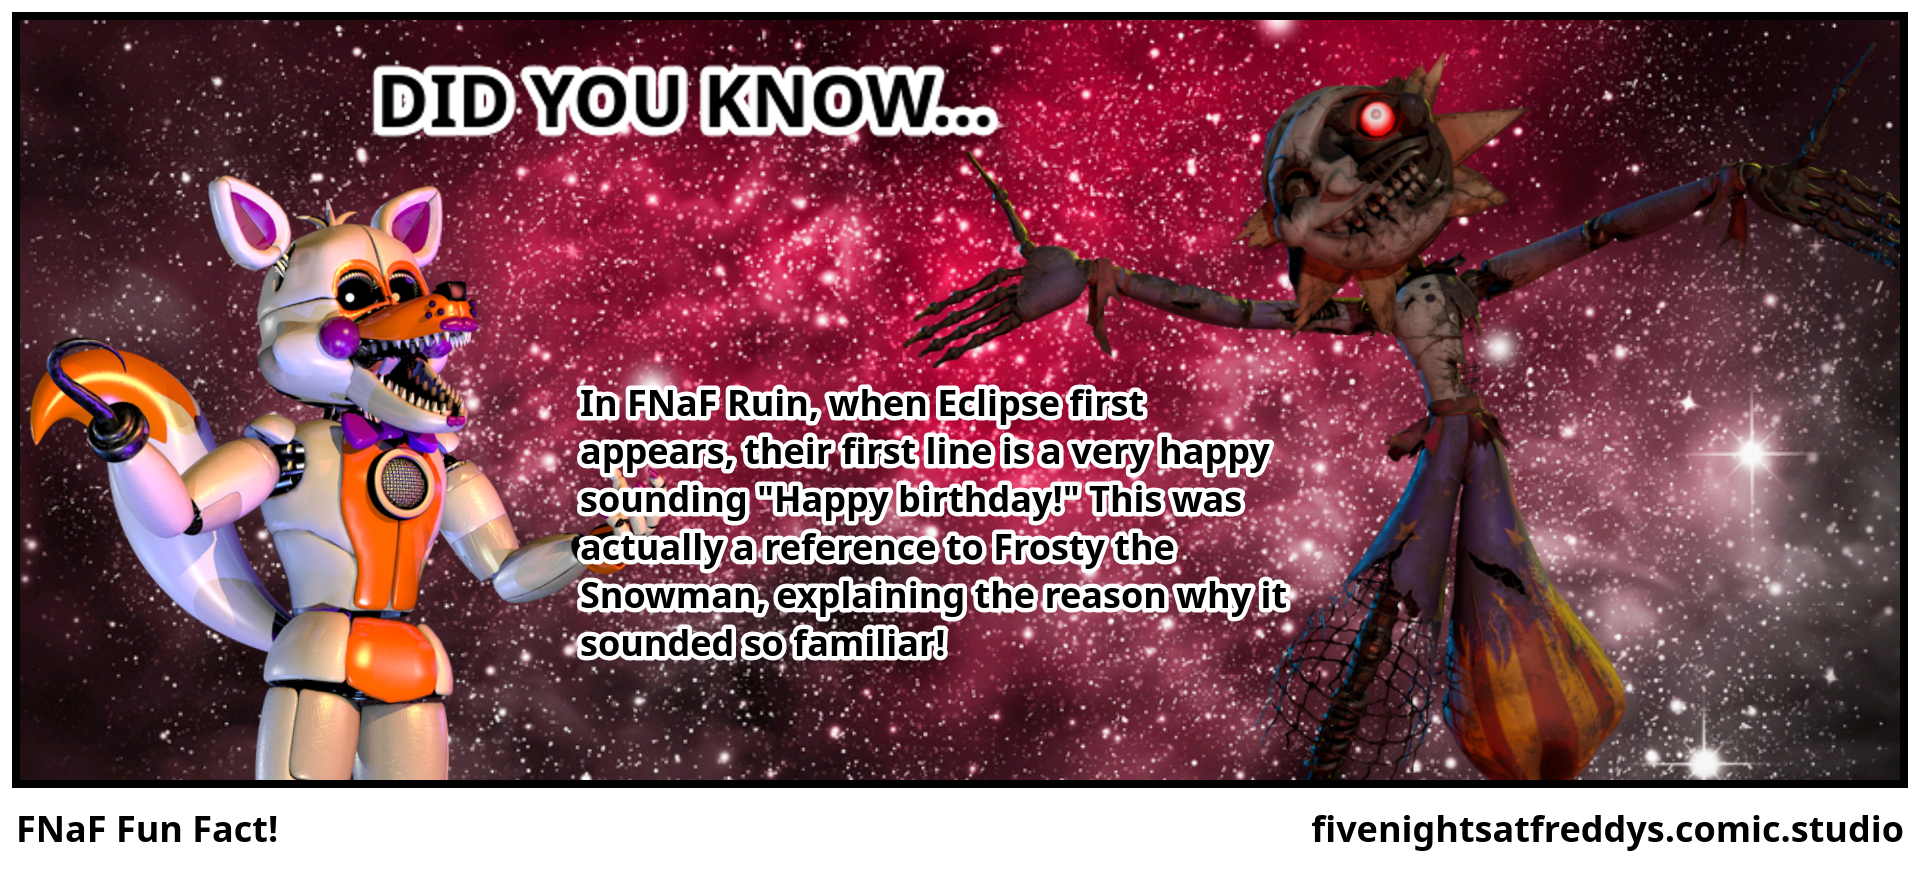 FNaF Fun Fact!